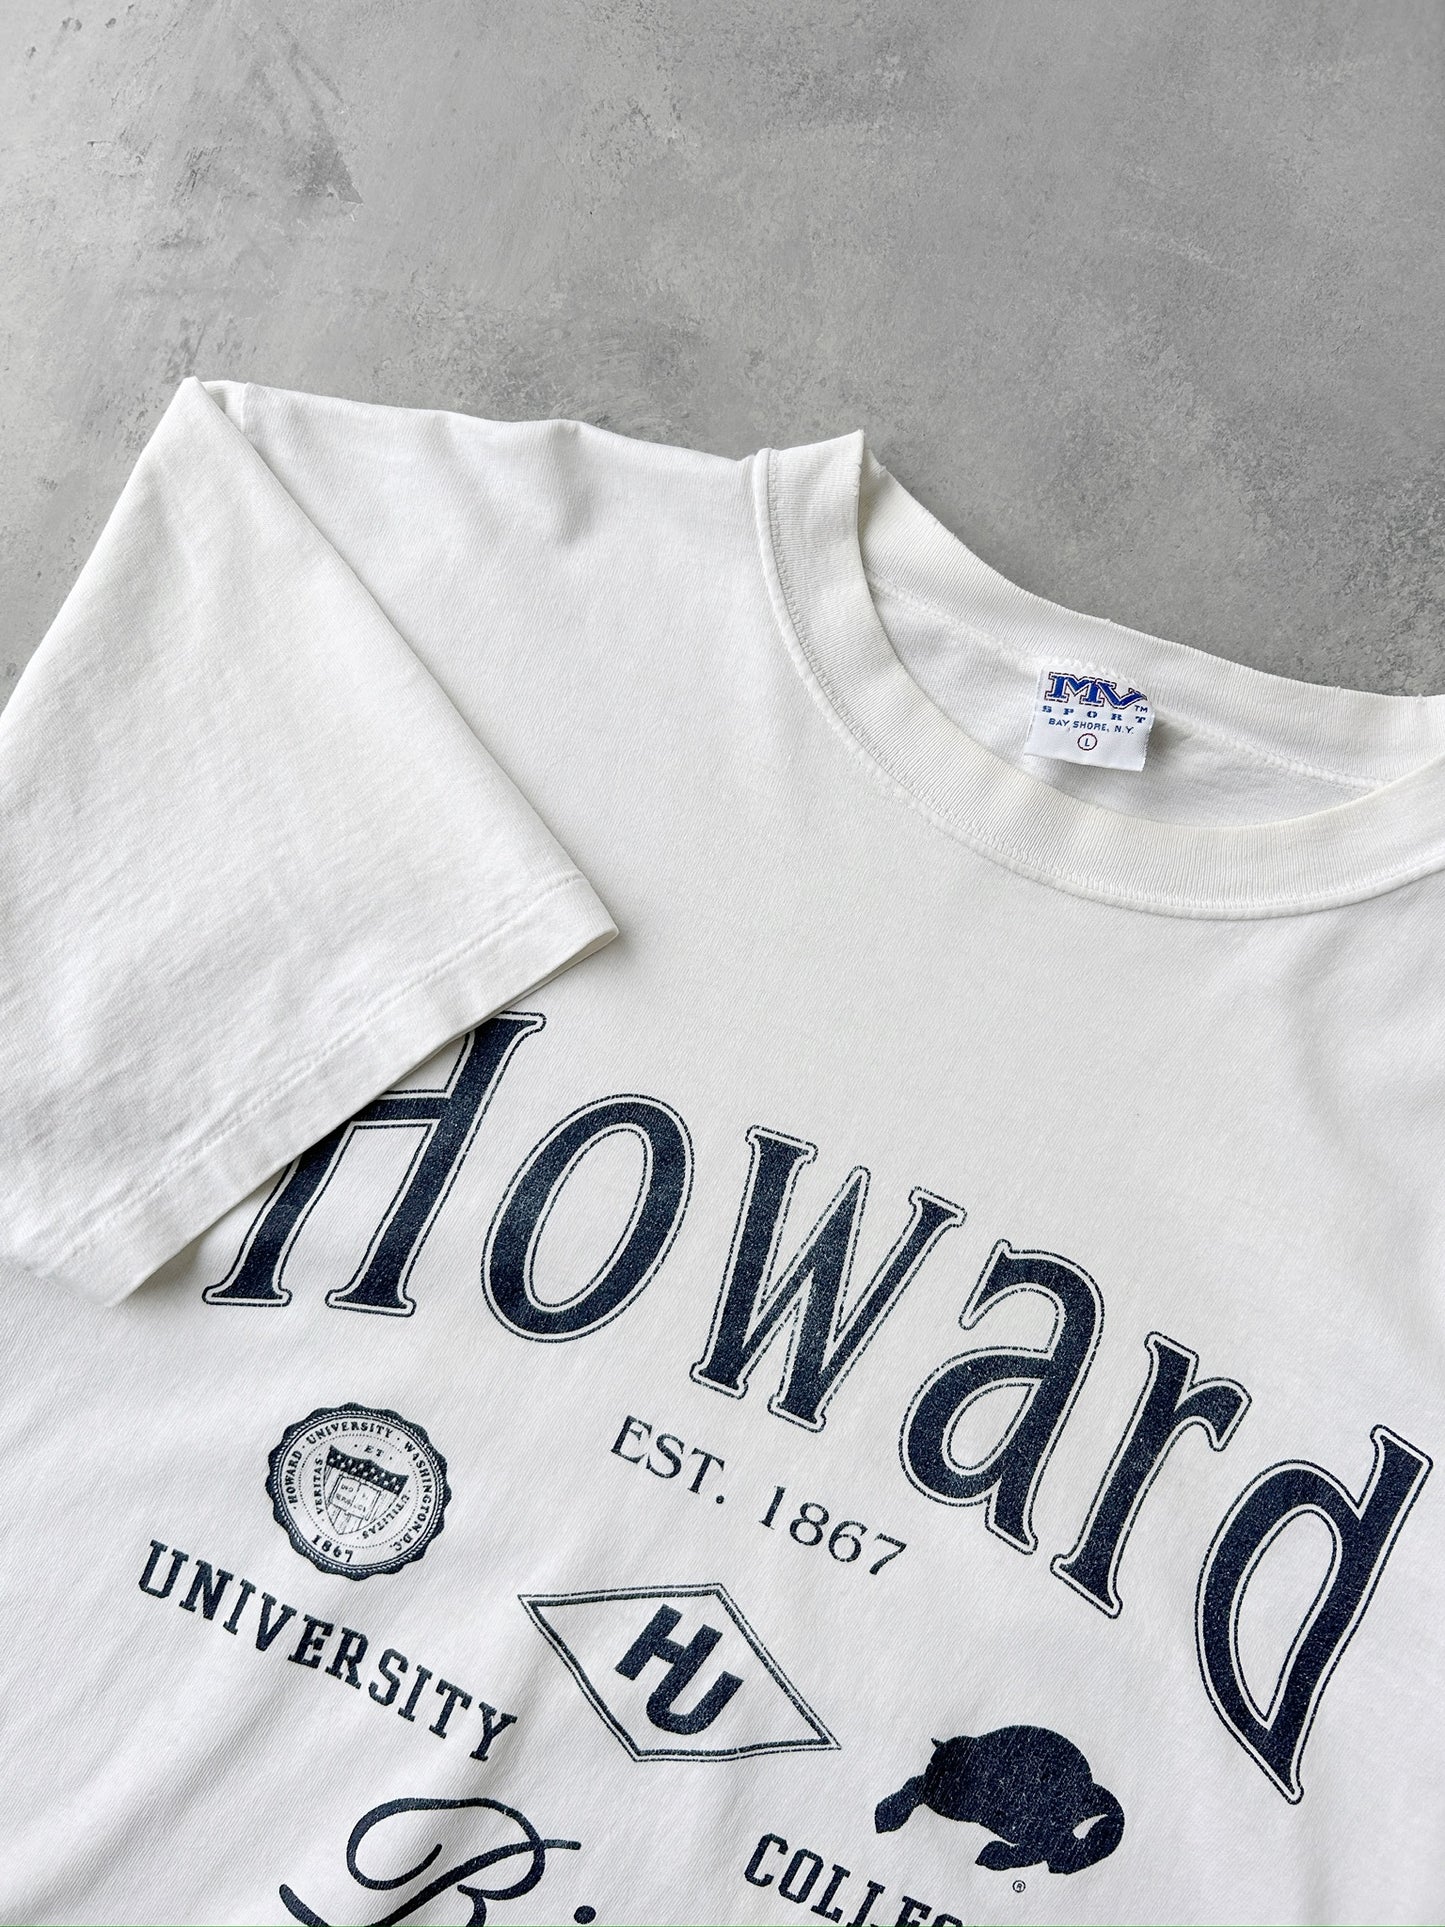 Howard University T-Shirt 90's - Large